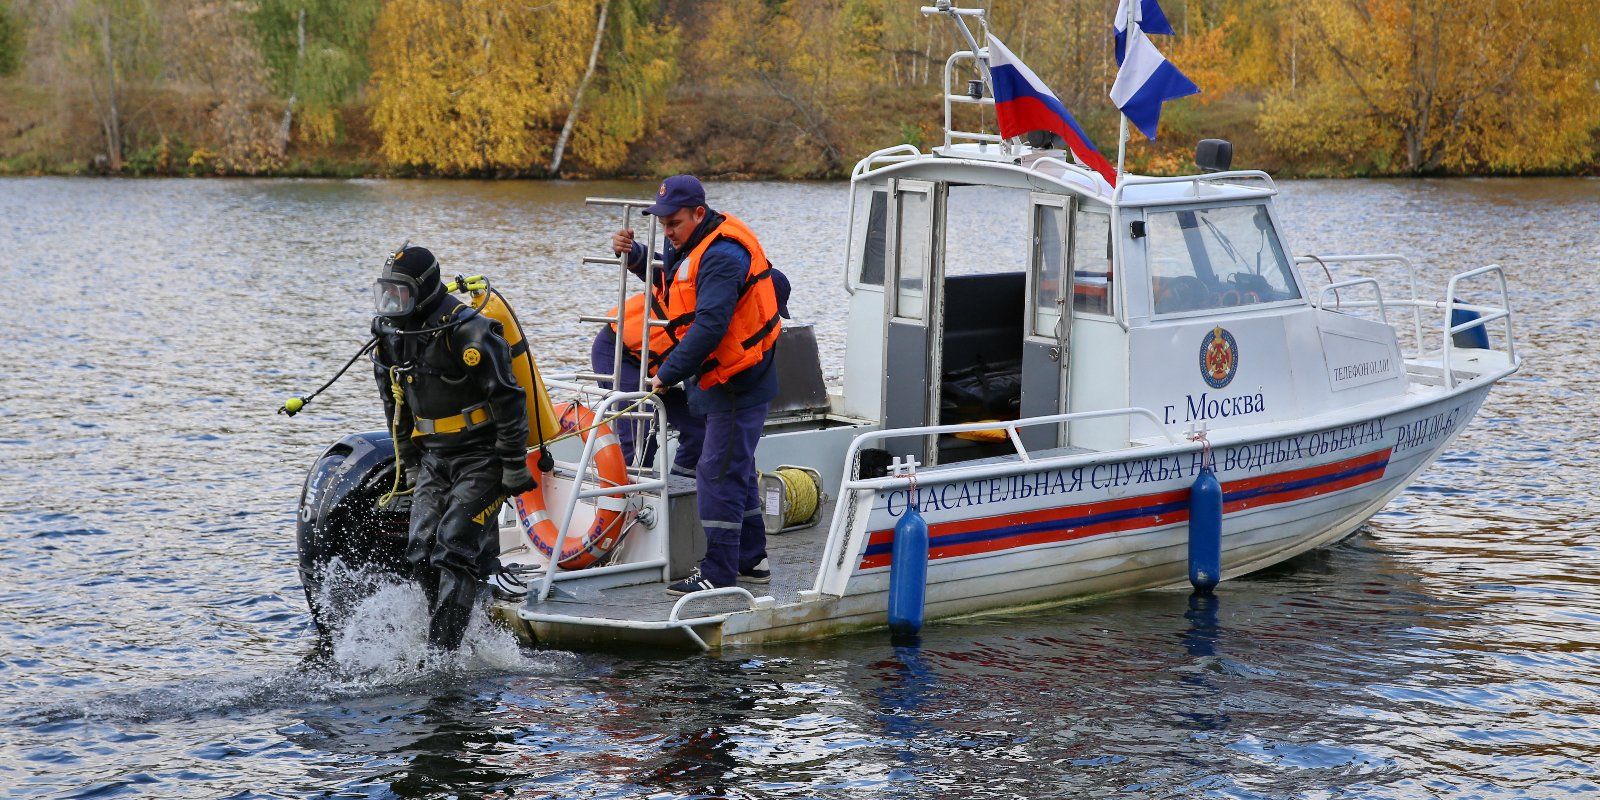  Московские спасатели проходят аттестацию. Пресс-служба Управления по ТиНАО Департамента ГОЧСиПБ   